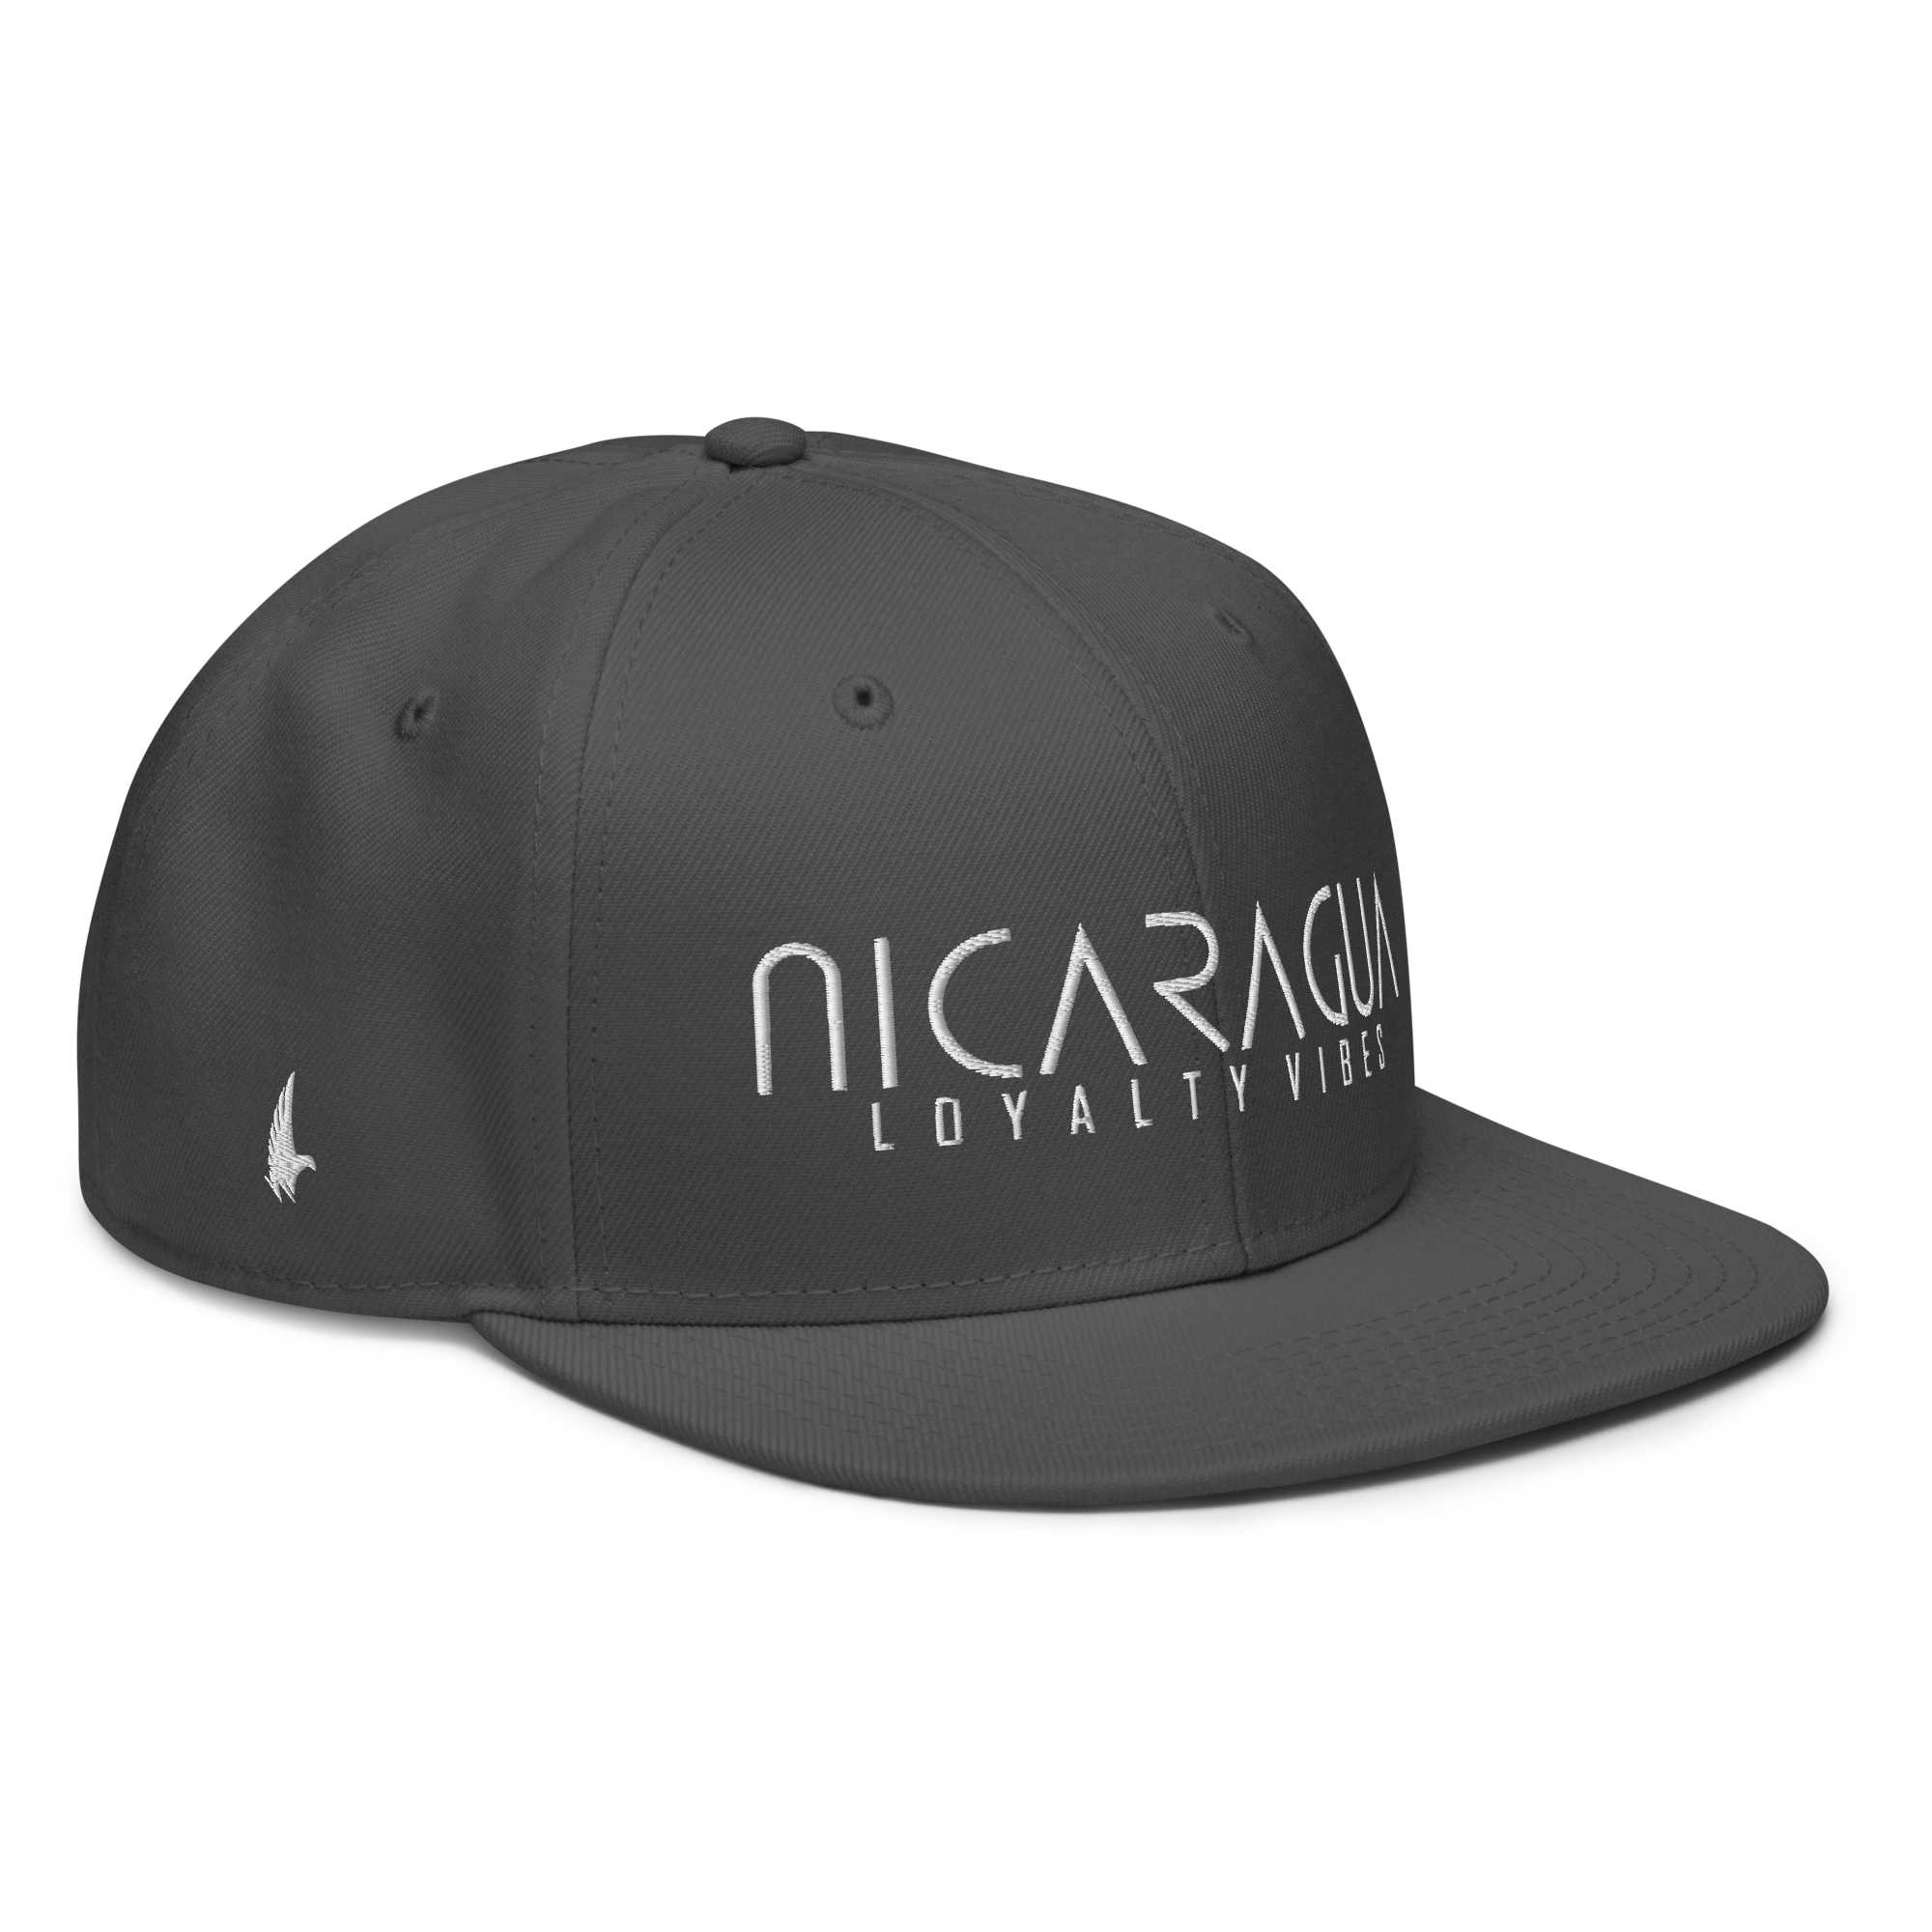 Classic Nicaragua Snapback Hat Grey - Loyalty Vibes